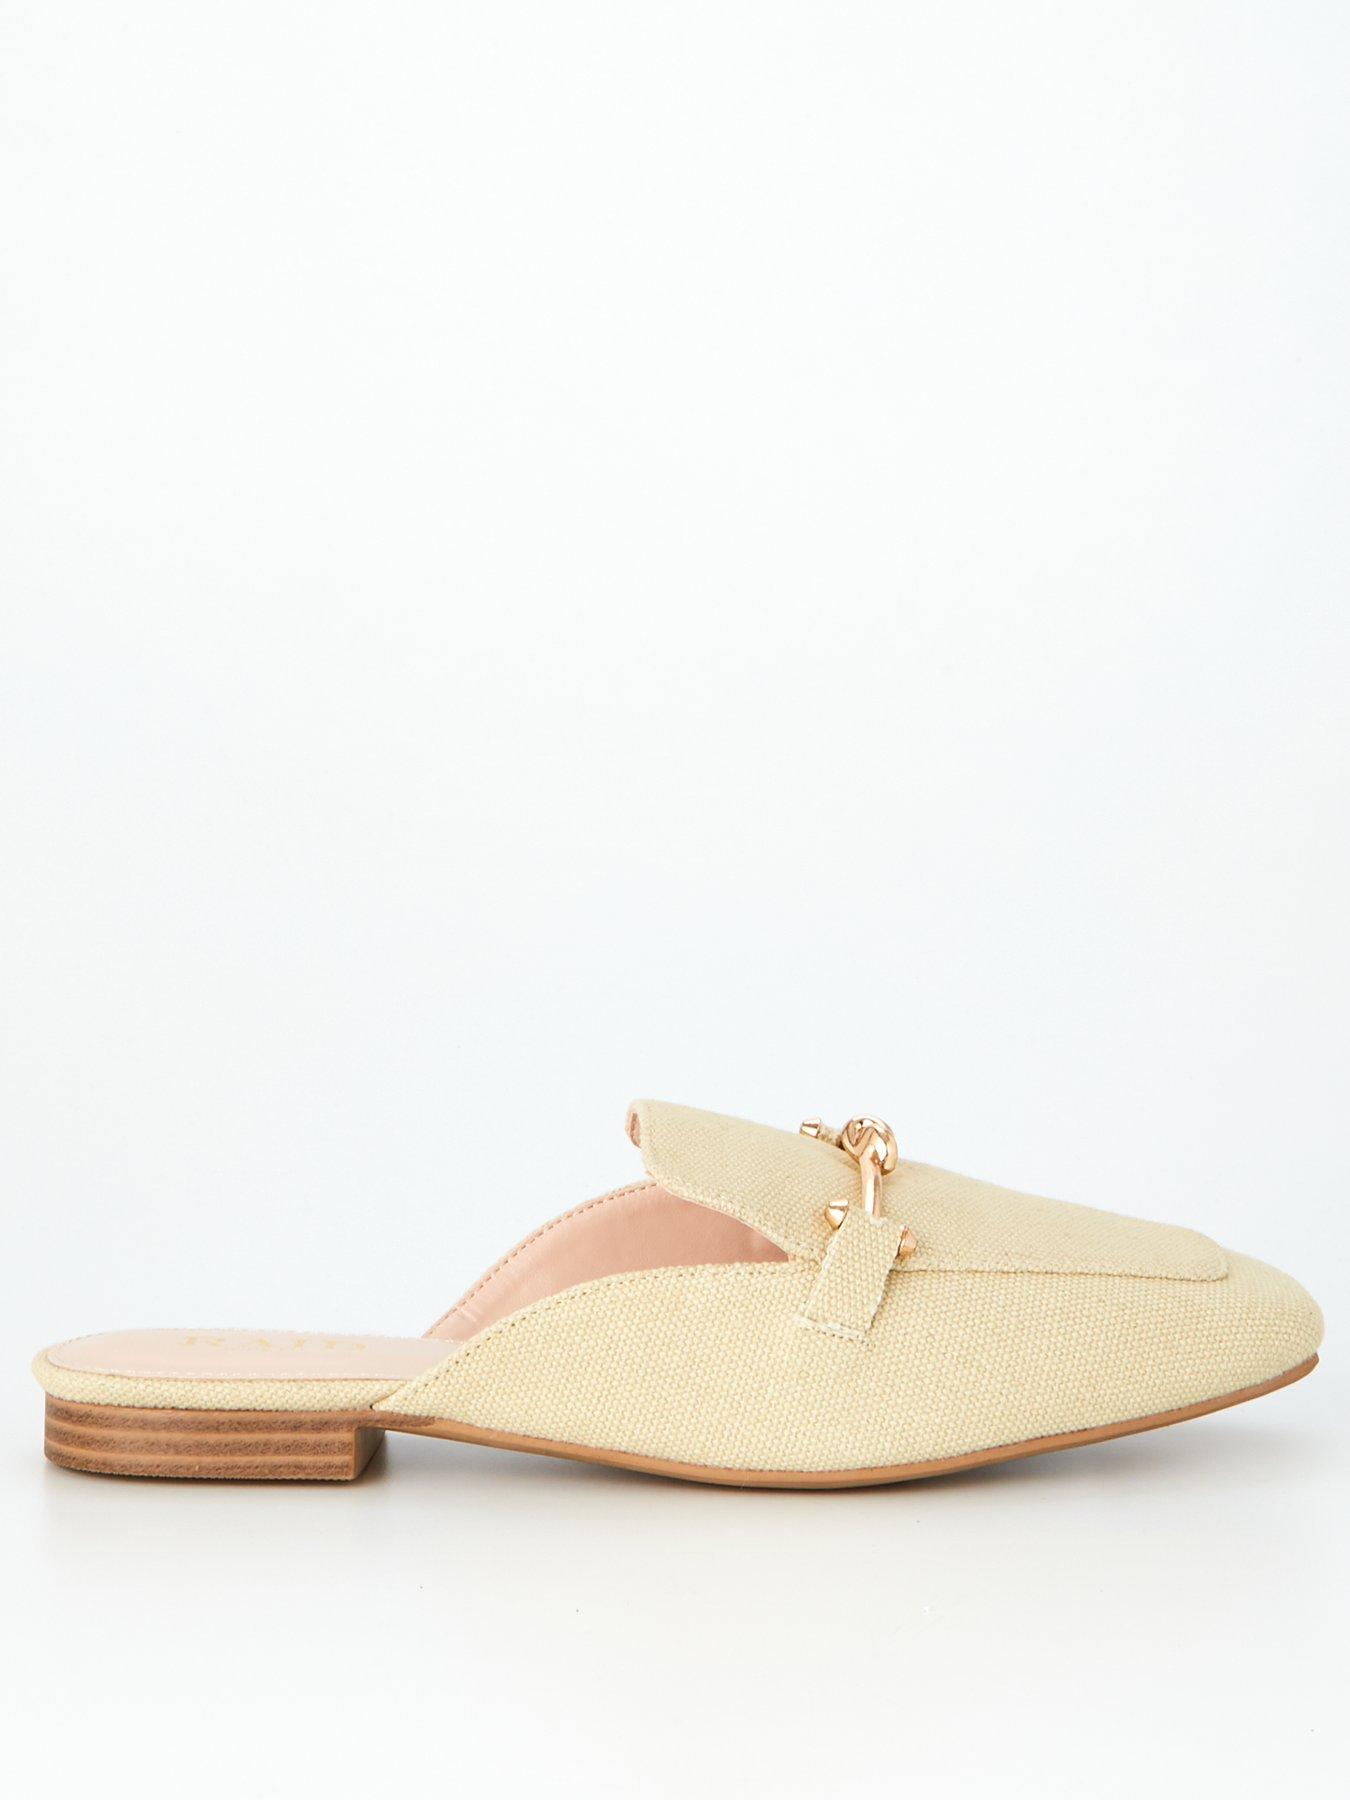 ASOS Design Wide Fit Sally Toe Cap Slingback Block Heel Shoes in beige-Neutral